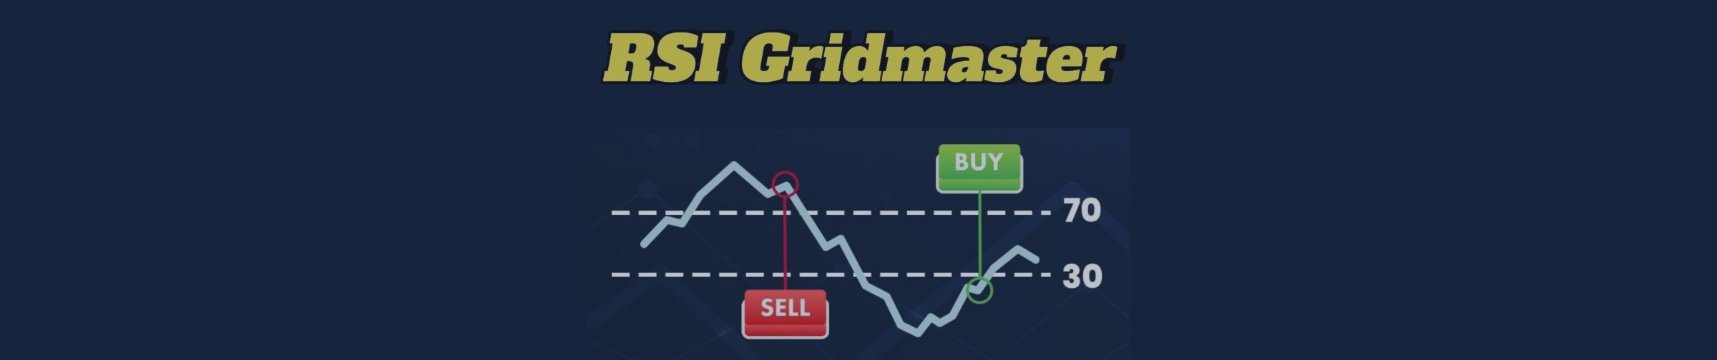 RSI GridMaster Settings